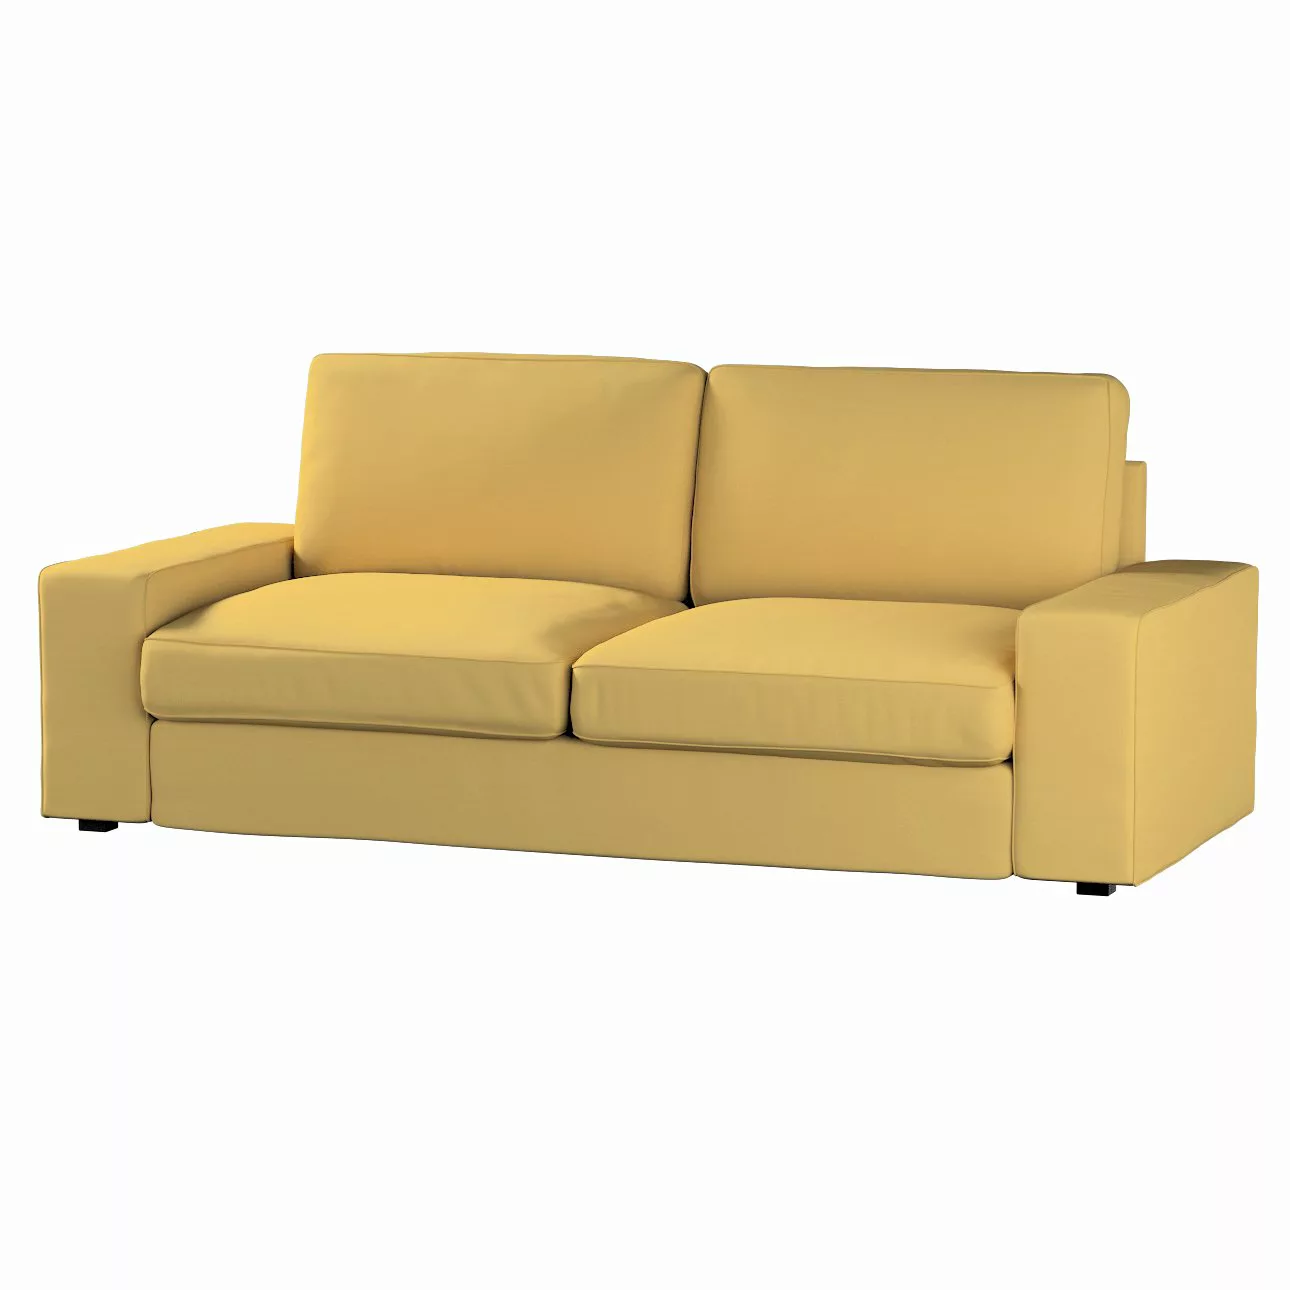 Bezug für Kivik 3-Sitzer Sofa, chiffongelb, Bezug für Sofa Kivik 3-Sitzer, günstig online kaufen